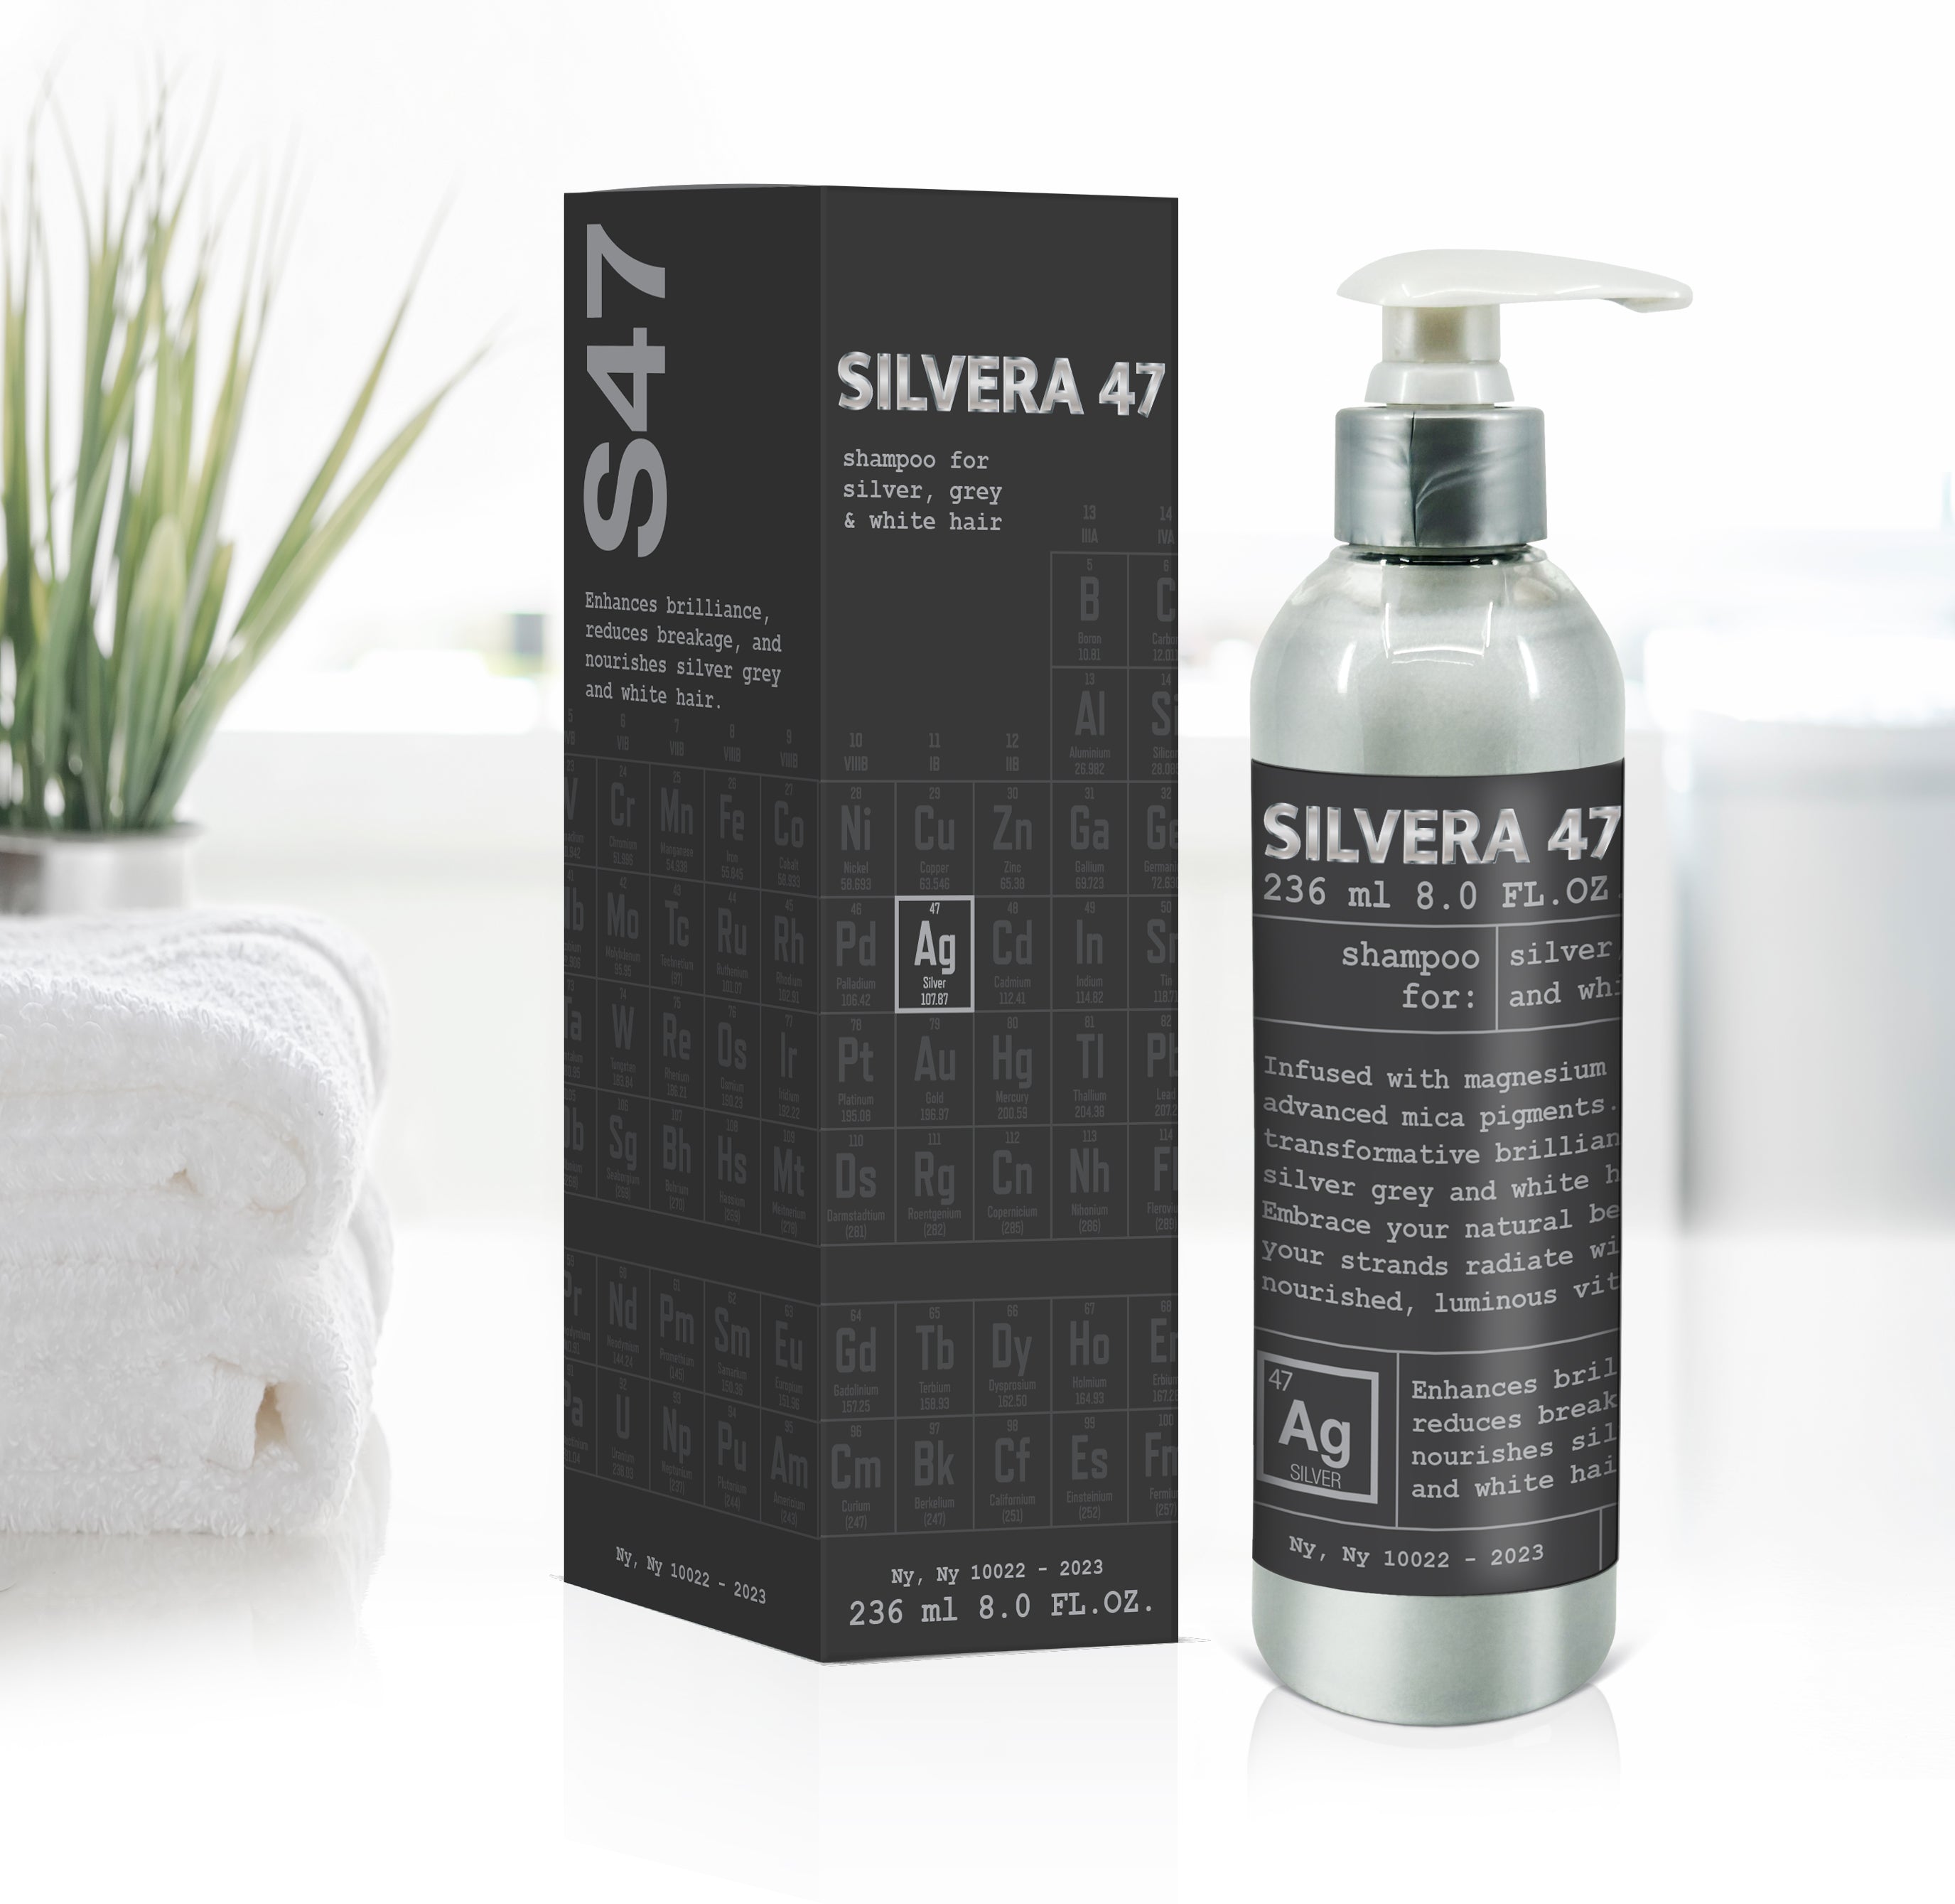 Silvera 47 Shampoo For Grey Hair Shine By JOEL WARREN